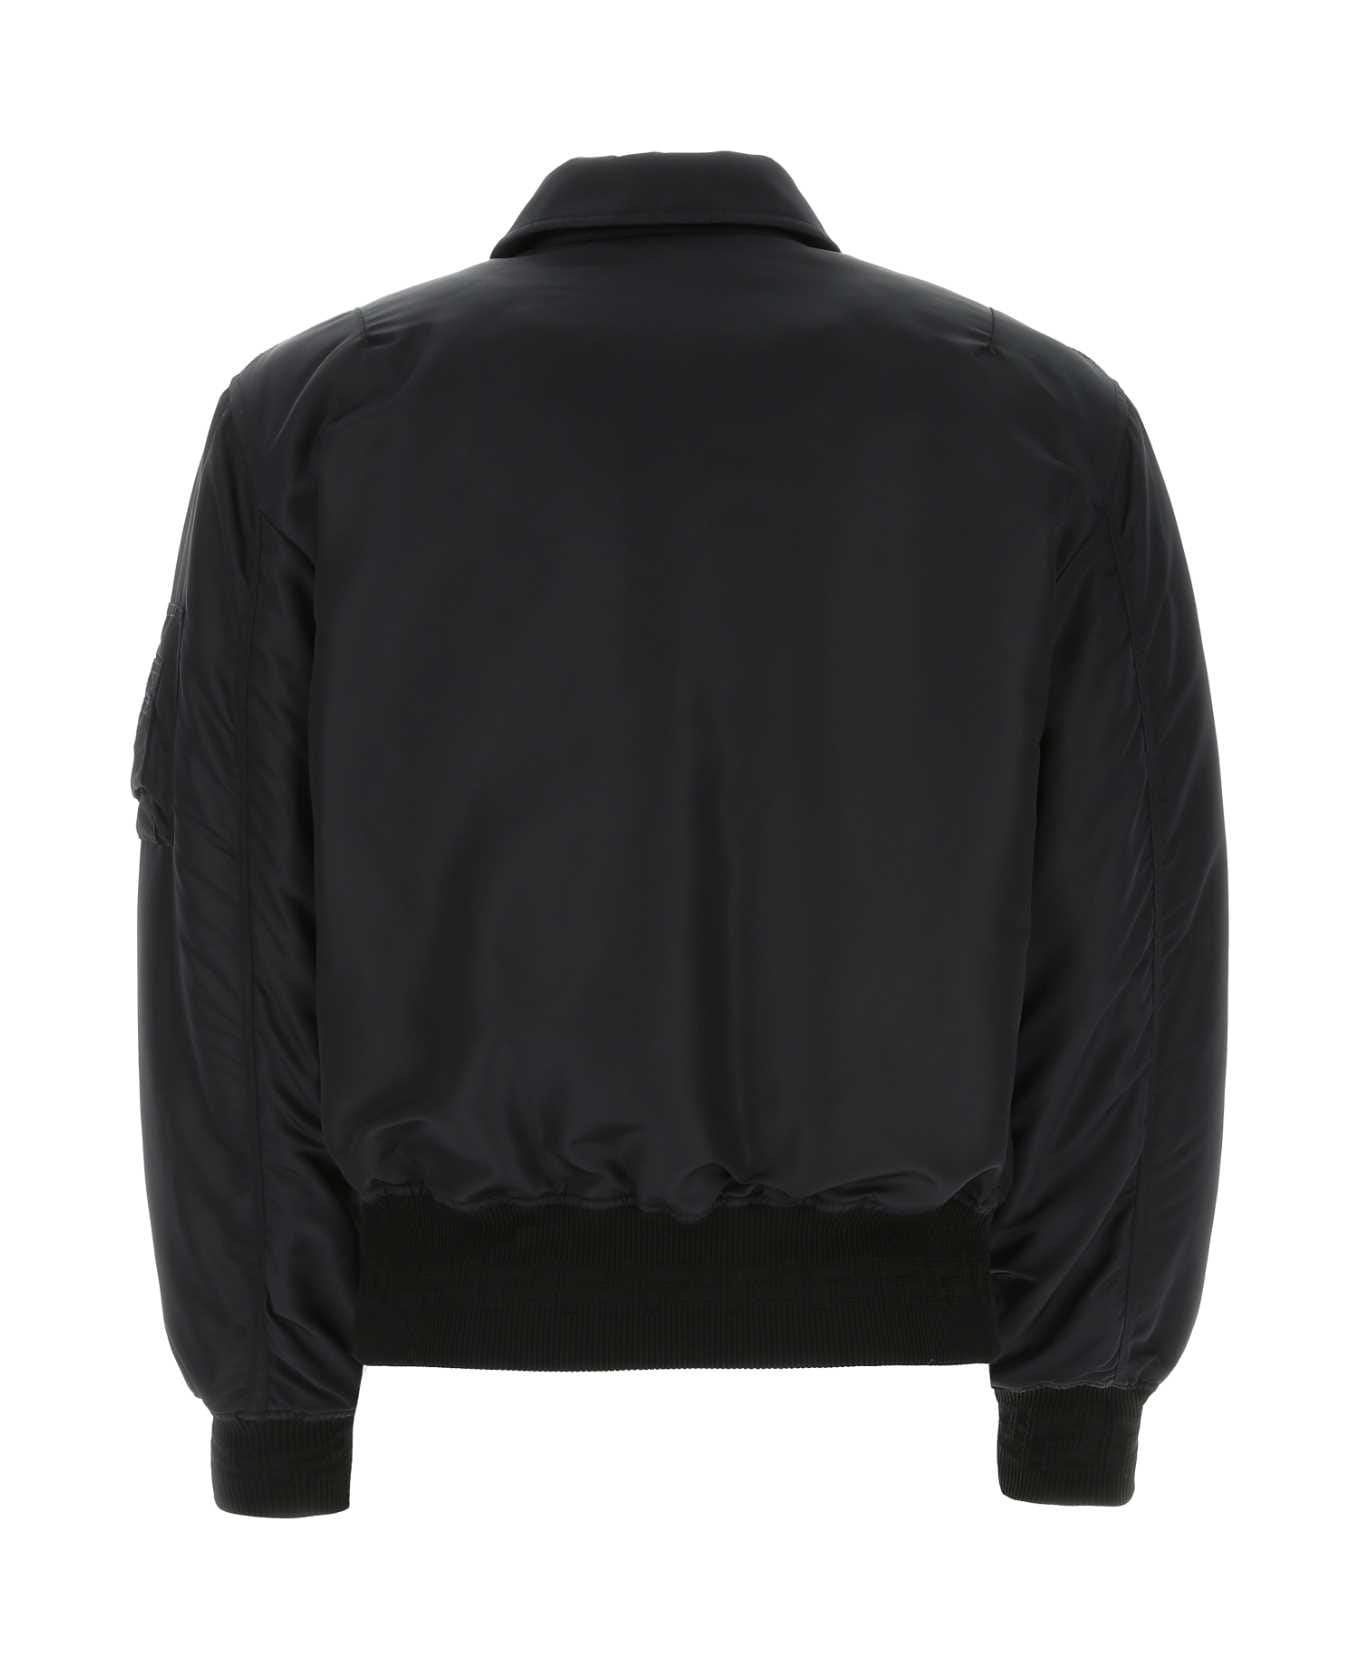 Versace Black Nylon Padded Jacket - 1B000